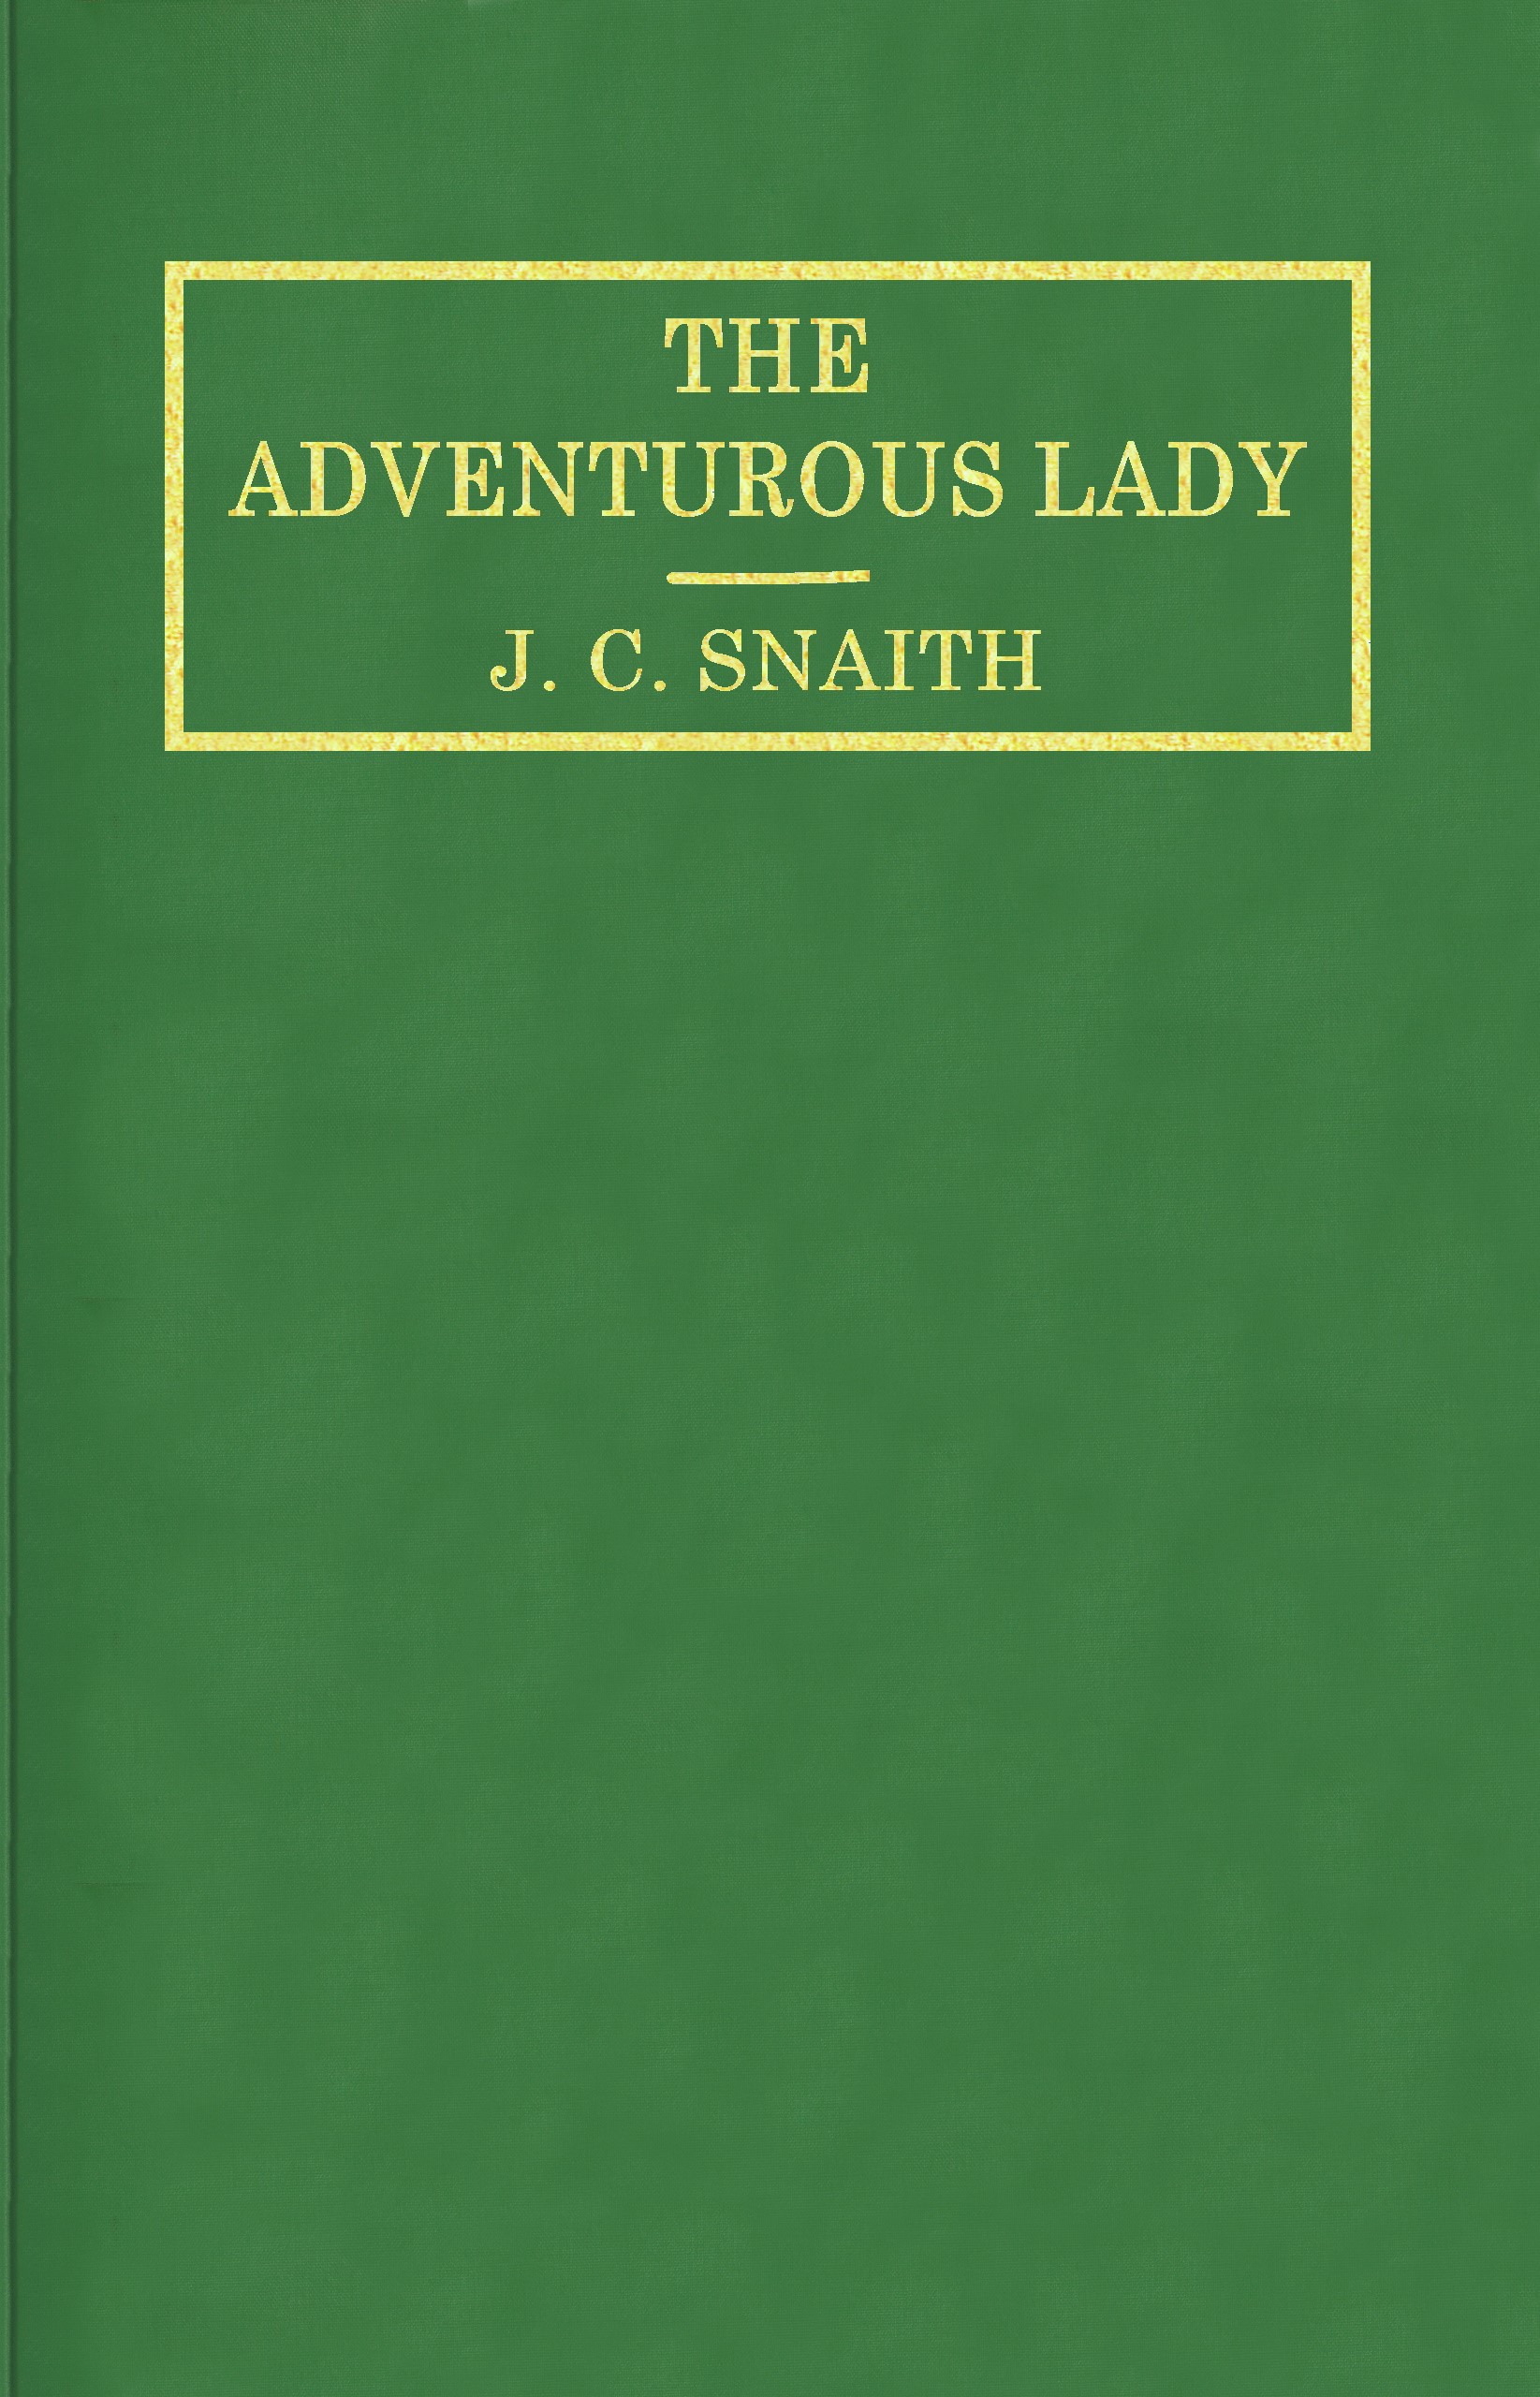 The Adventurous Lady, by J. C. Snaith—A Project Gutenberg eBook